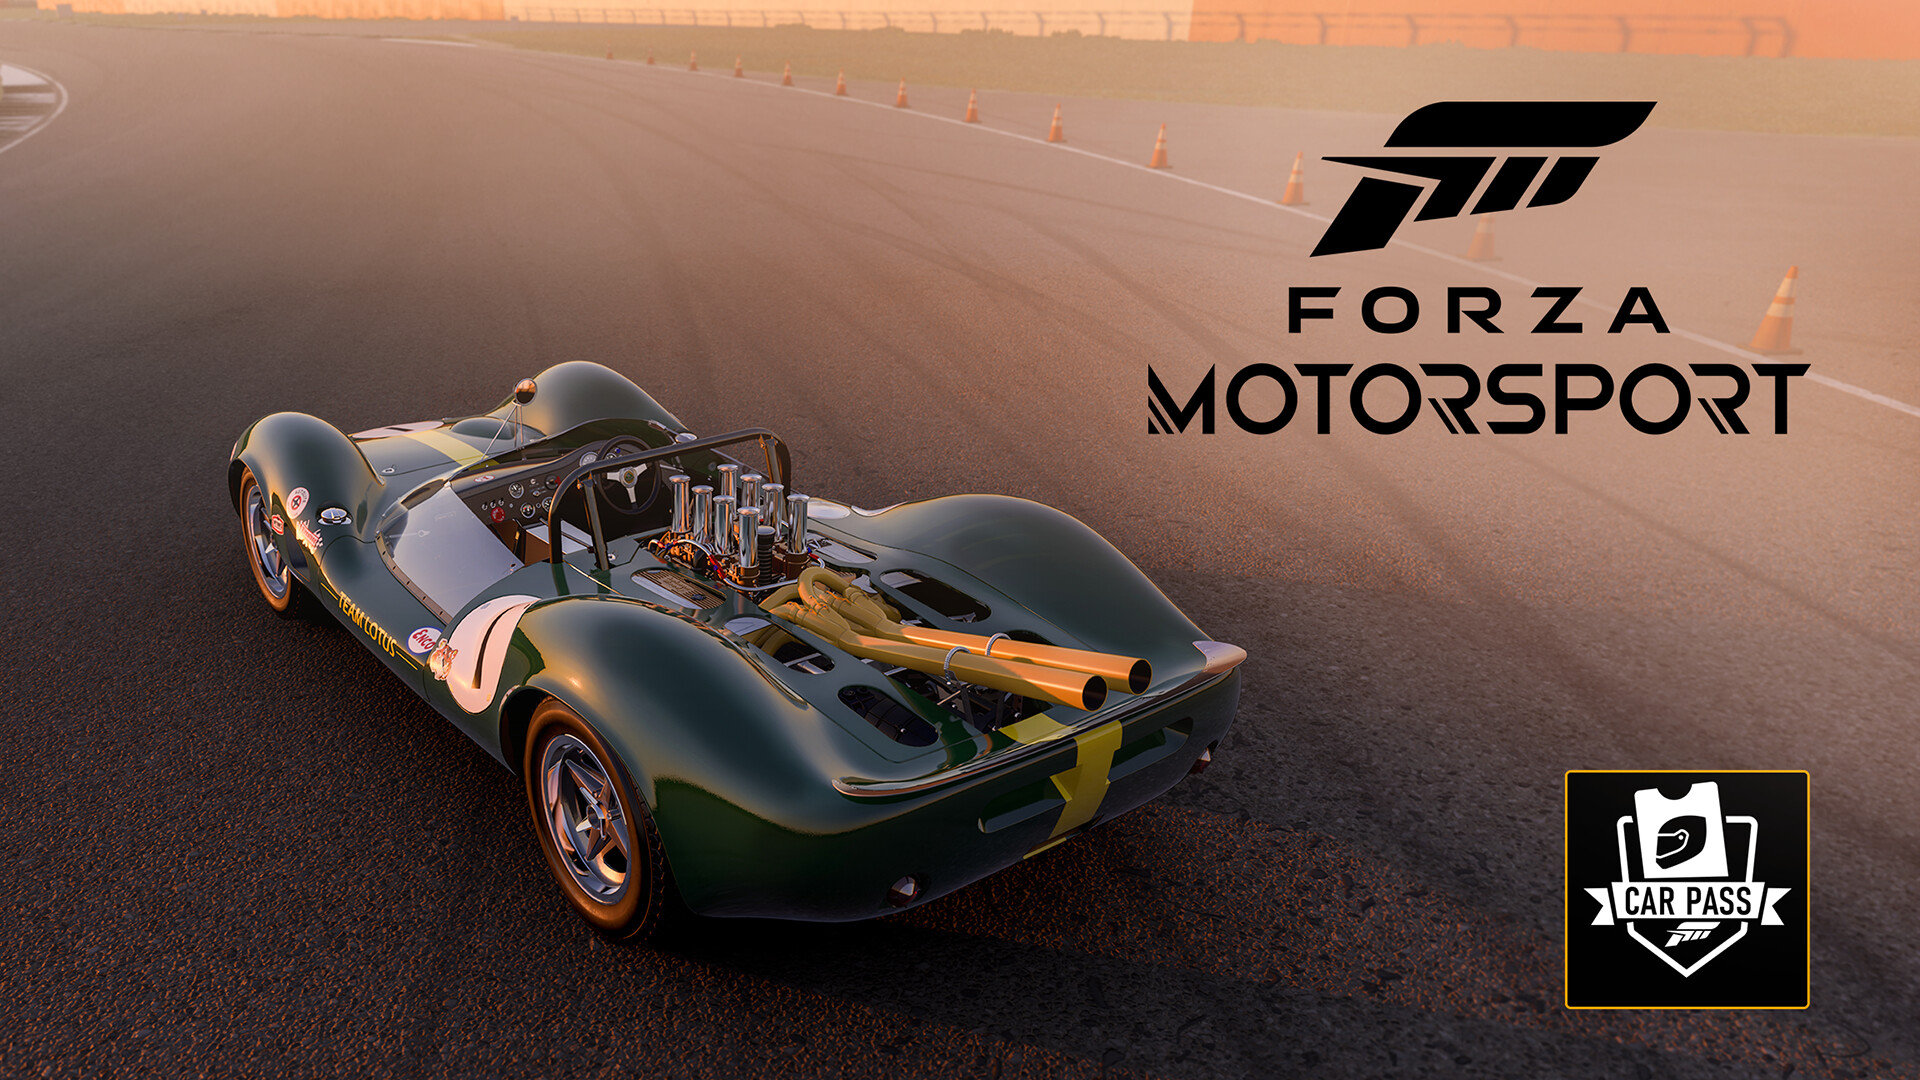 Forza Motorsport's first major content update has been detailed